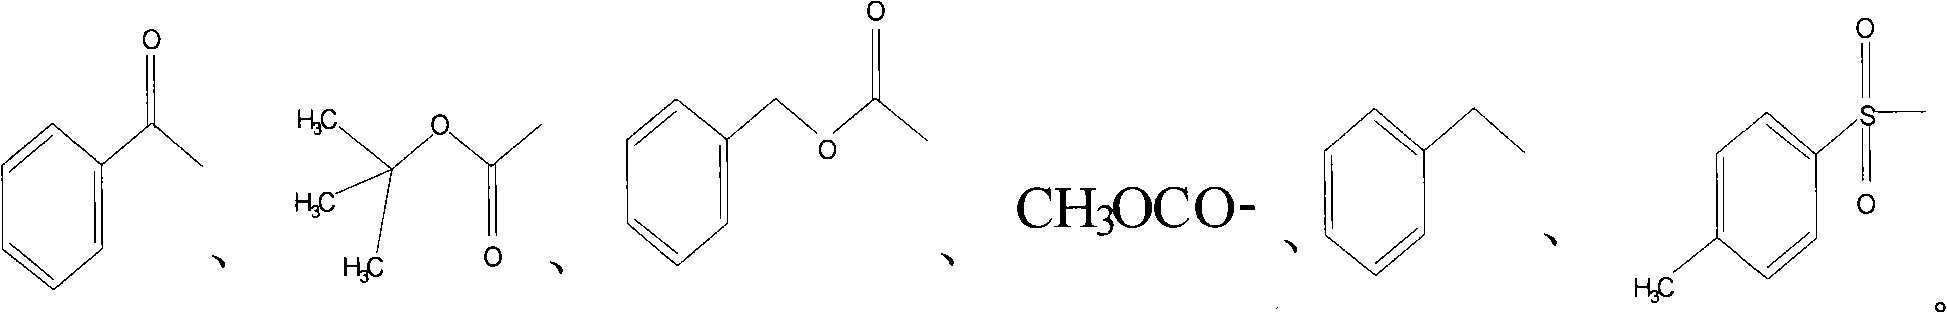 Preparation method of fasudil hydrochloride